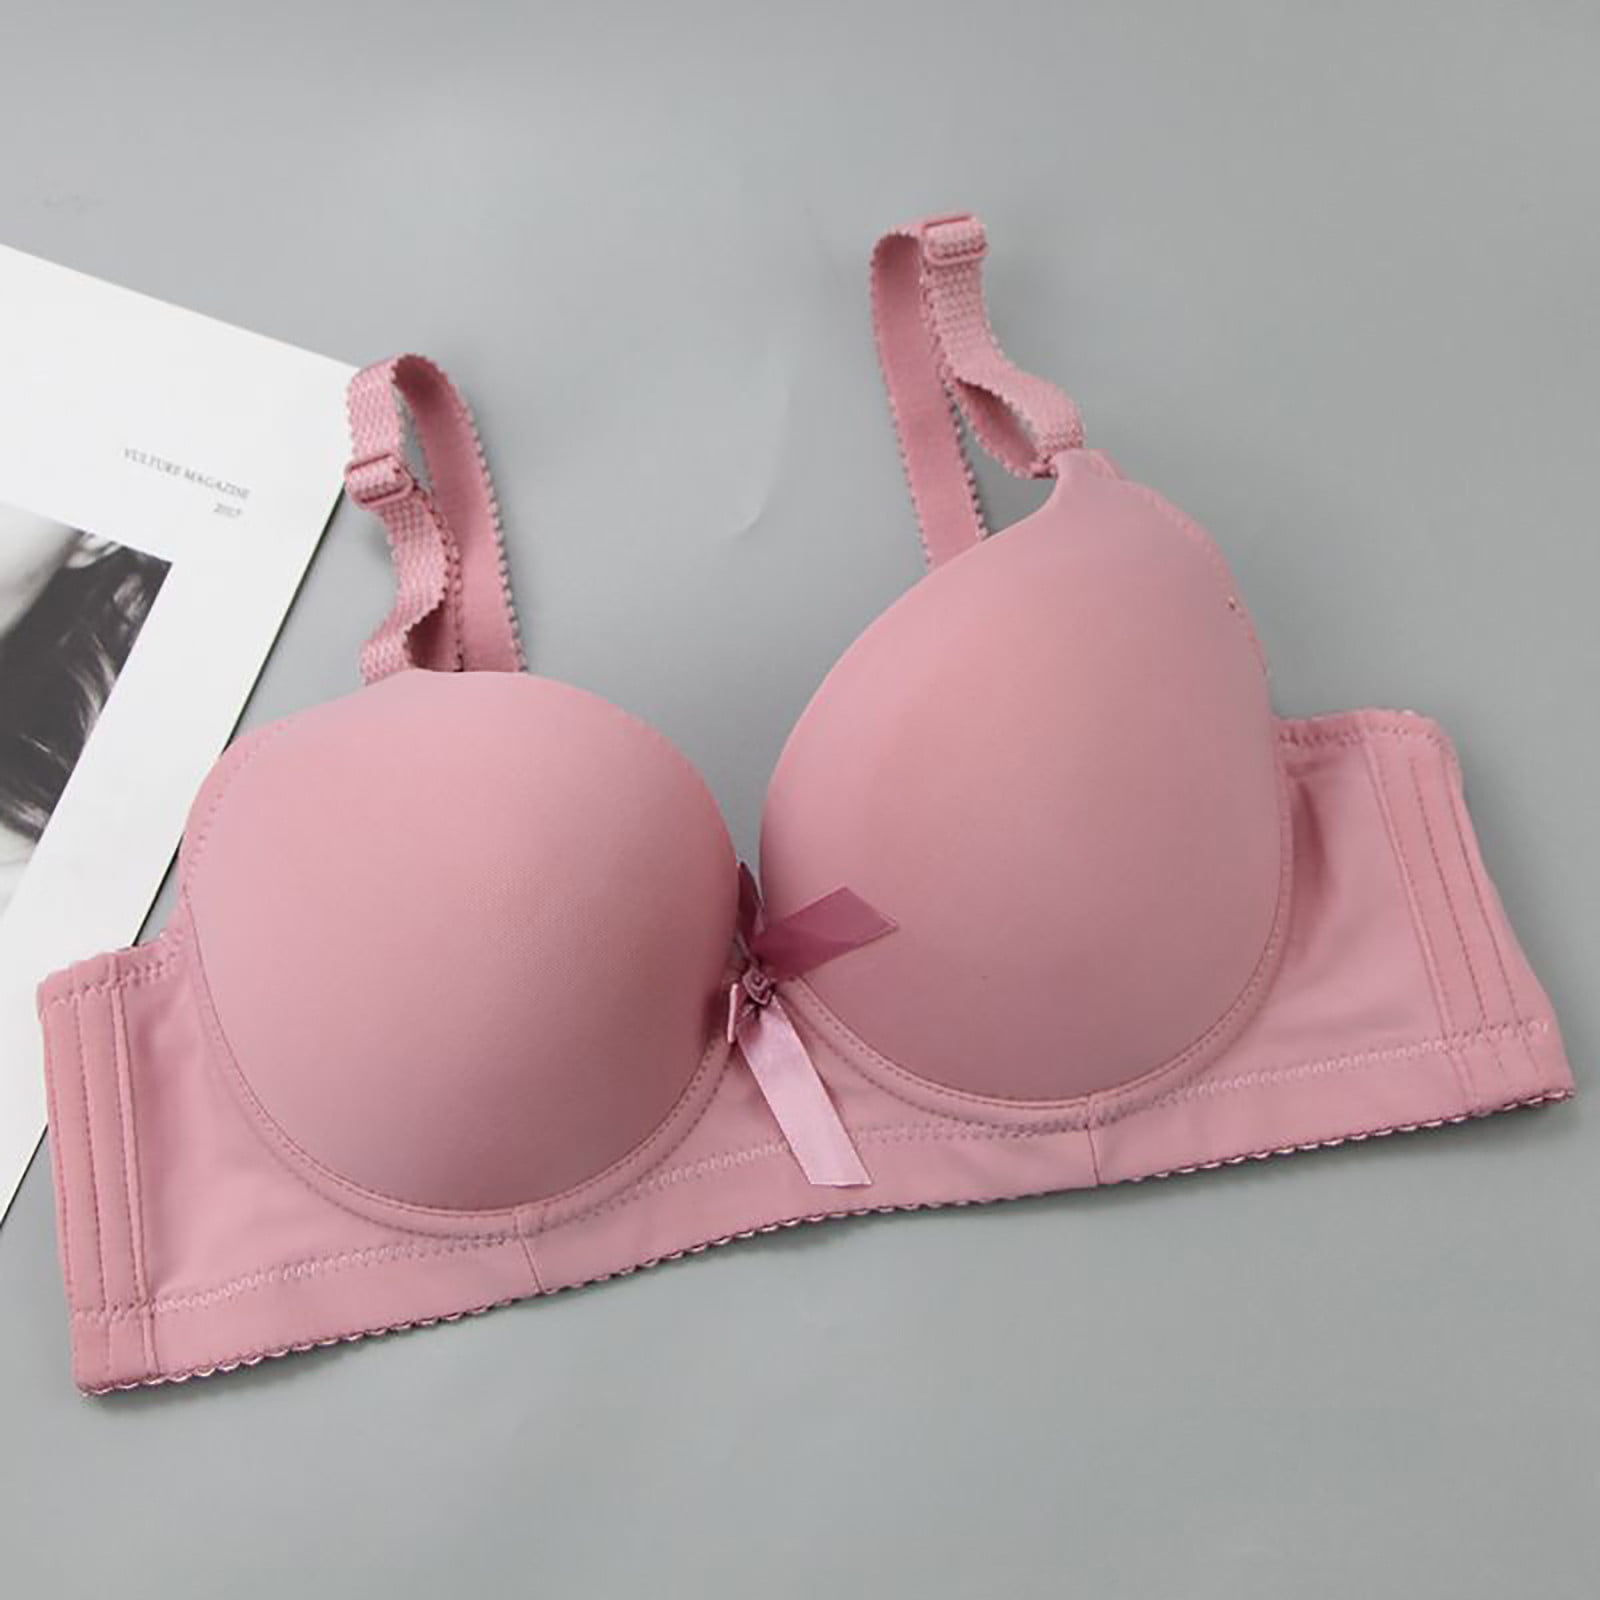 Odeerbi Bras for Women 2024 Lingerie Plus Size Seamless Lace Sports Bra  Comfortable Breathable Base Tops Underwear Khaki 